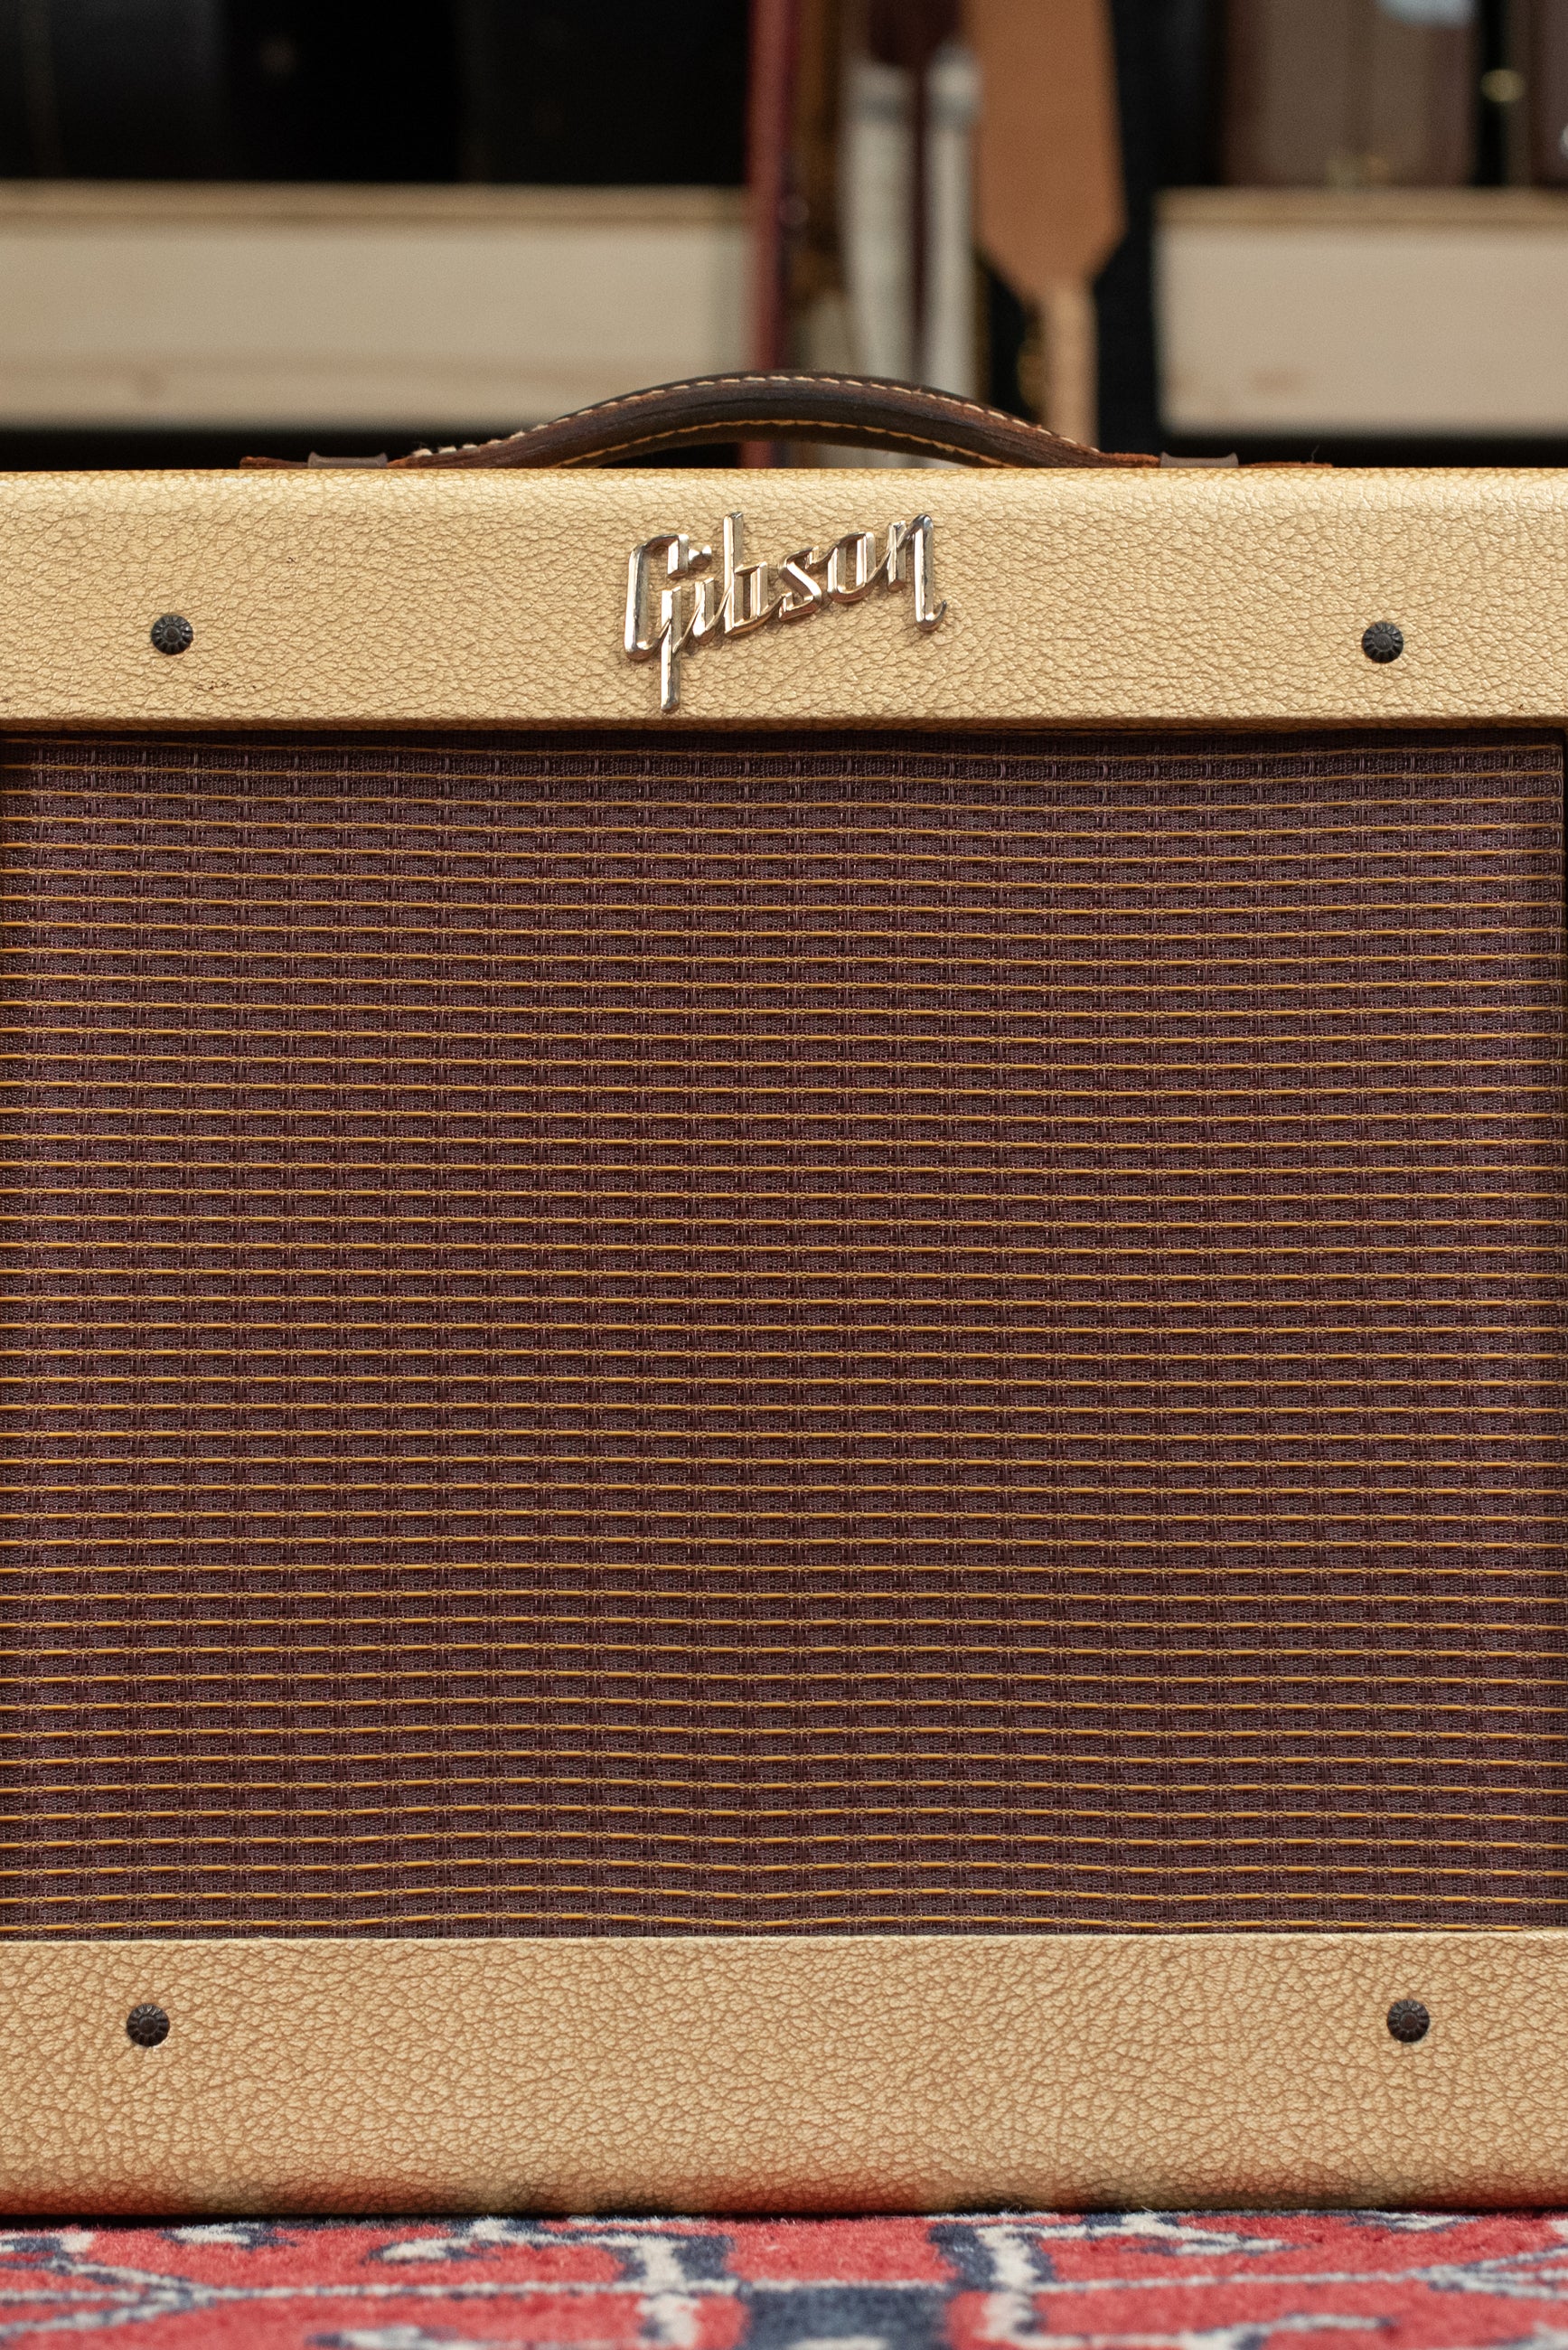 1957 Gibson GA-5 guitar amp